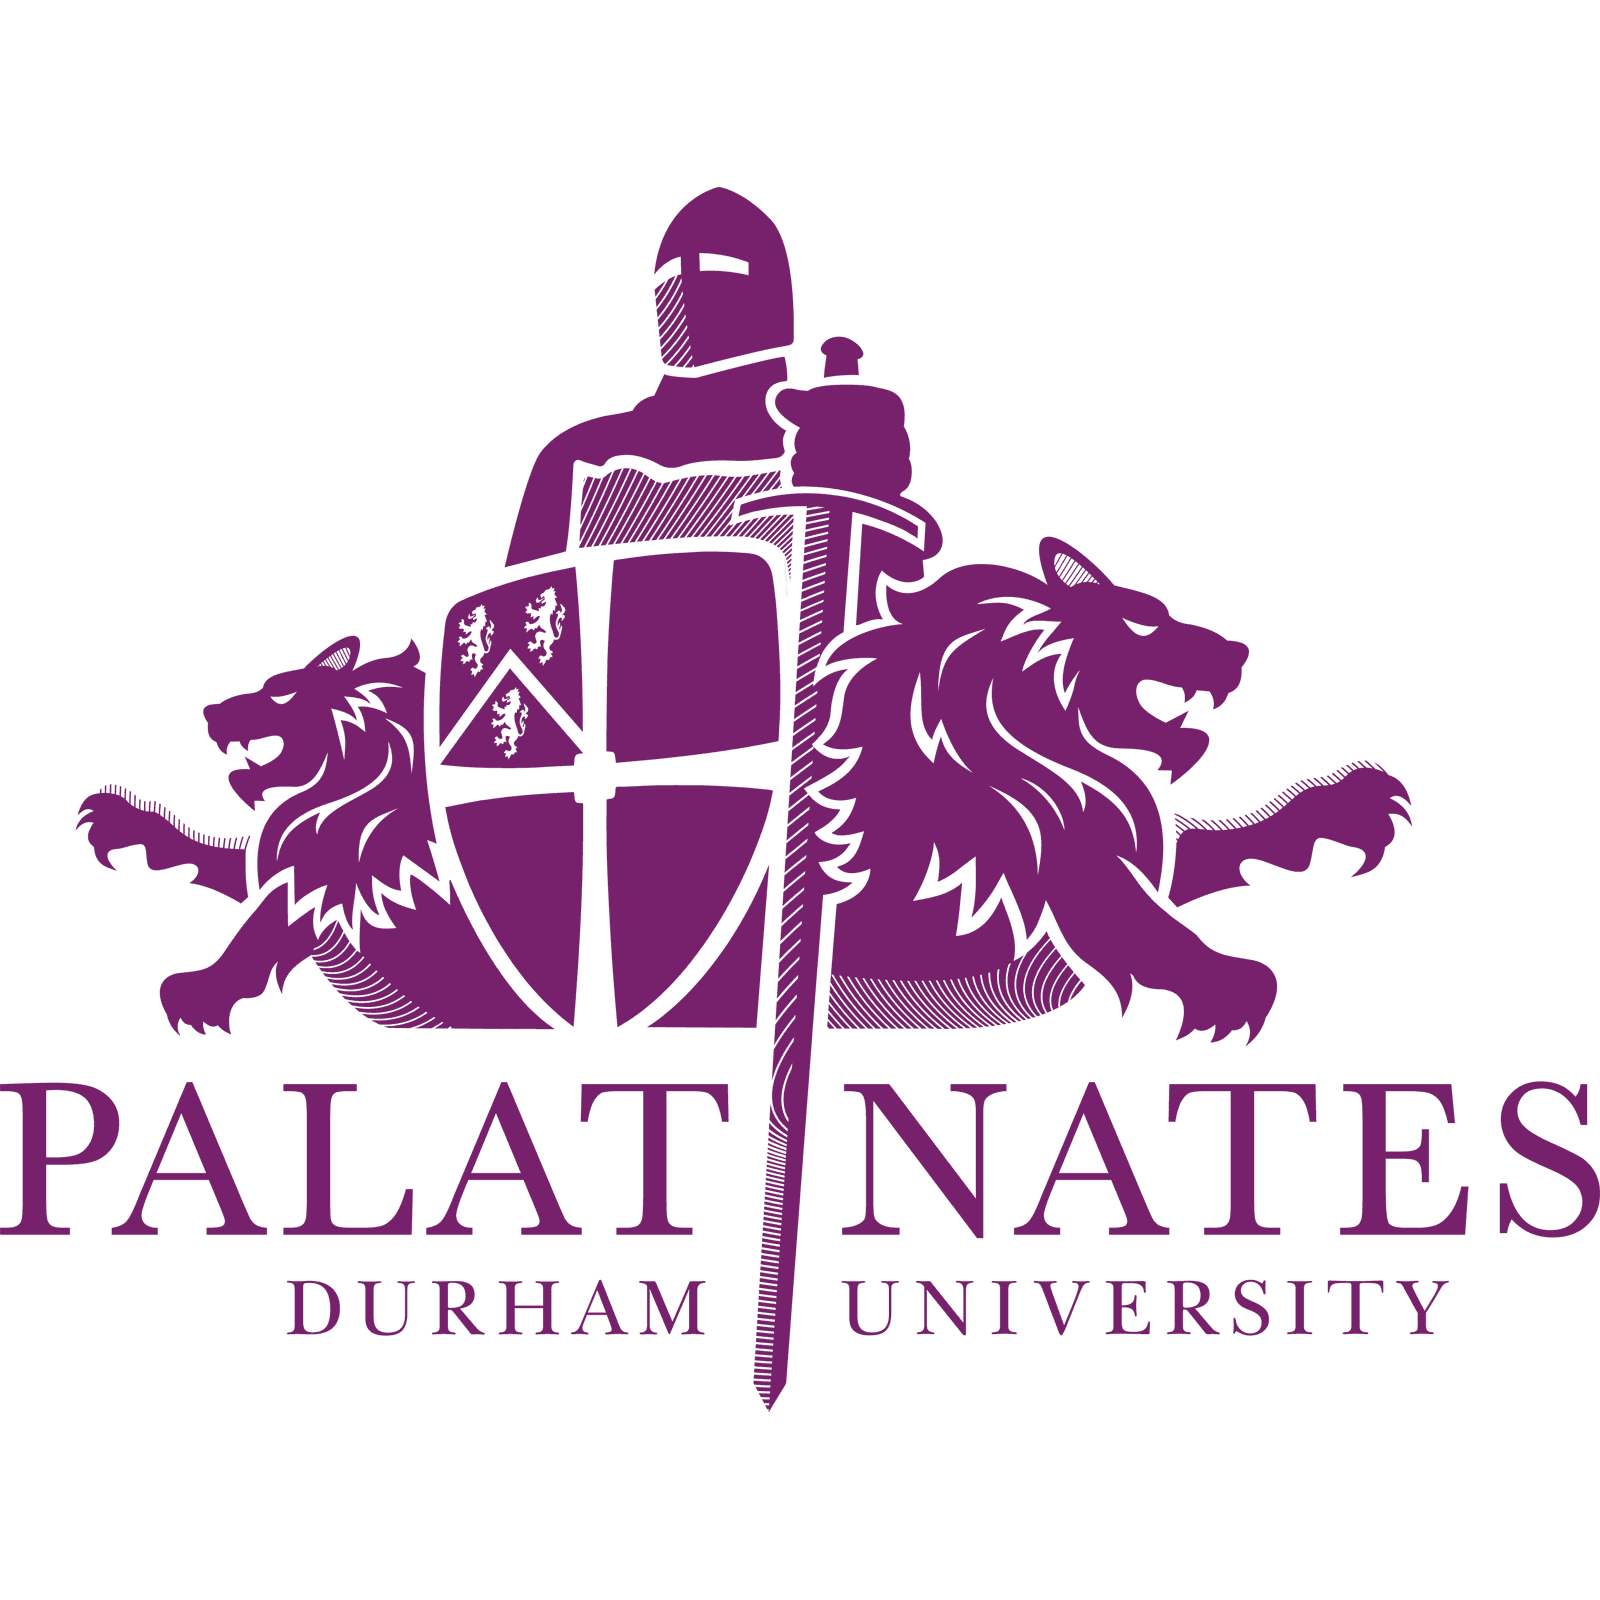 Durham Palatinates